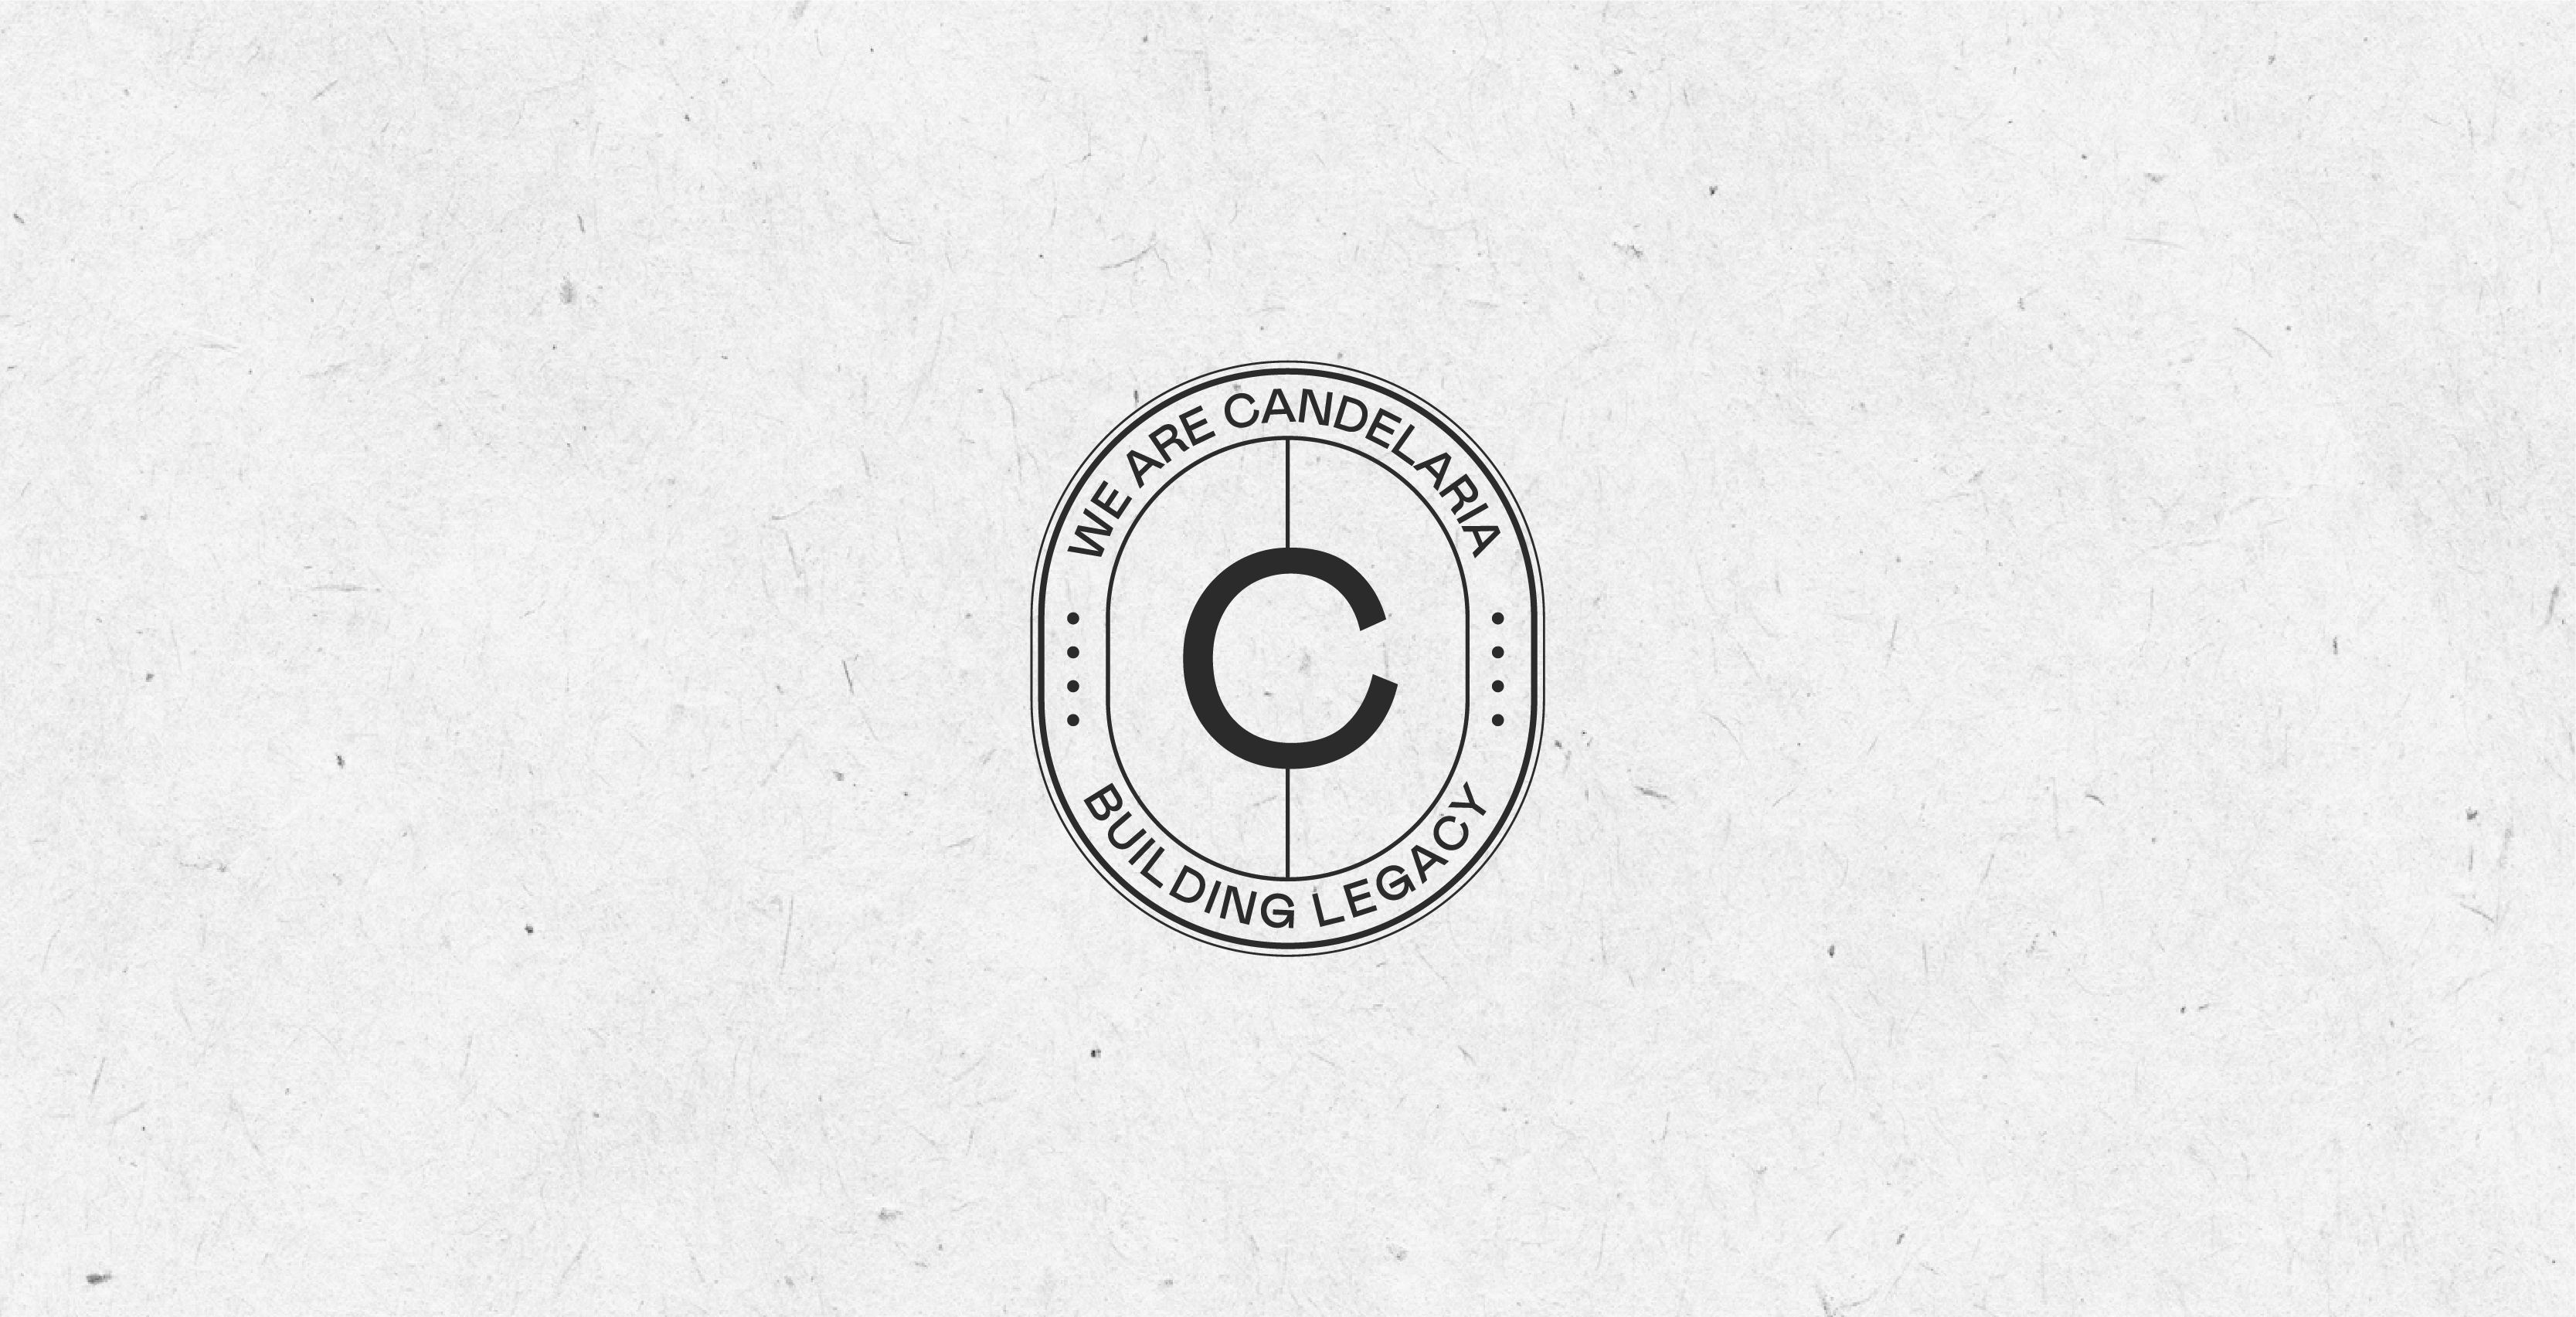 Branding UK - We are Candelaria